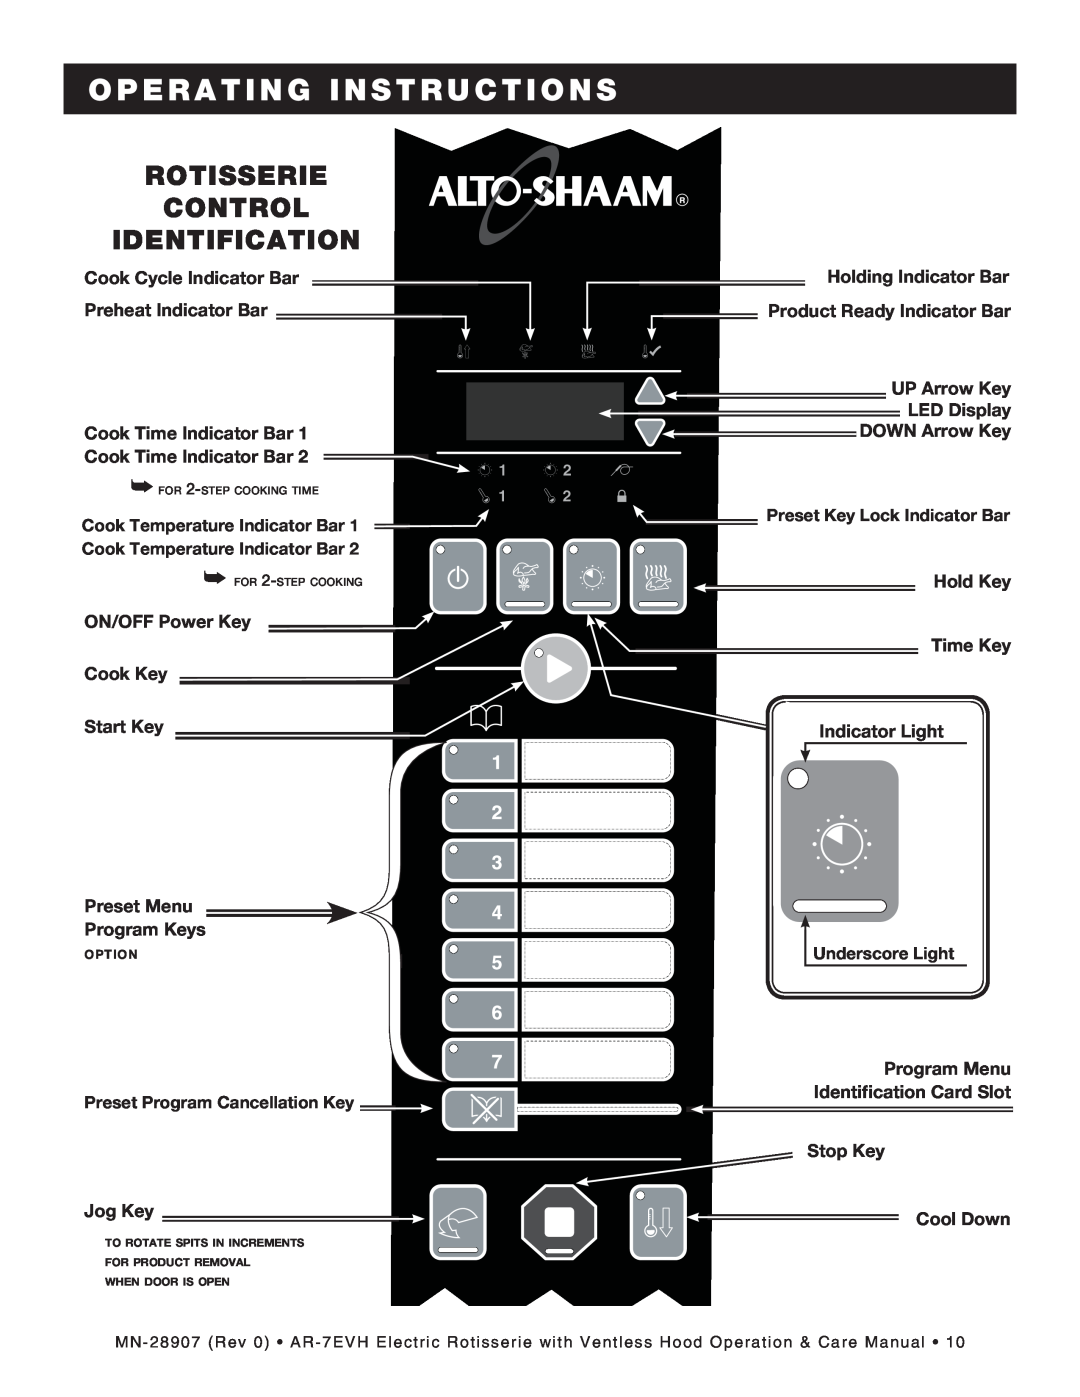 Alto-Shaam ar-7evh manual Rotisserie Control Identification, Operating Instructions, Underscore Light 